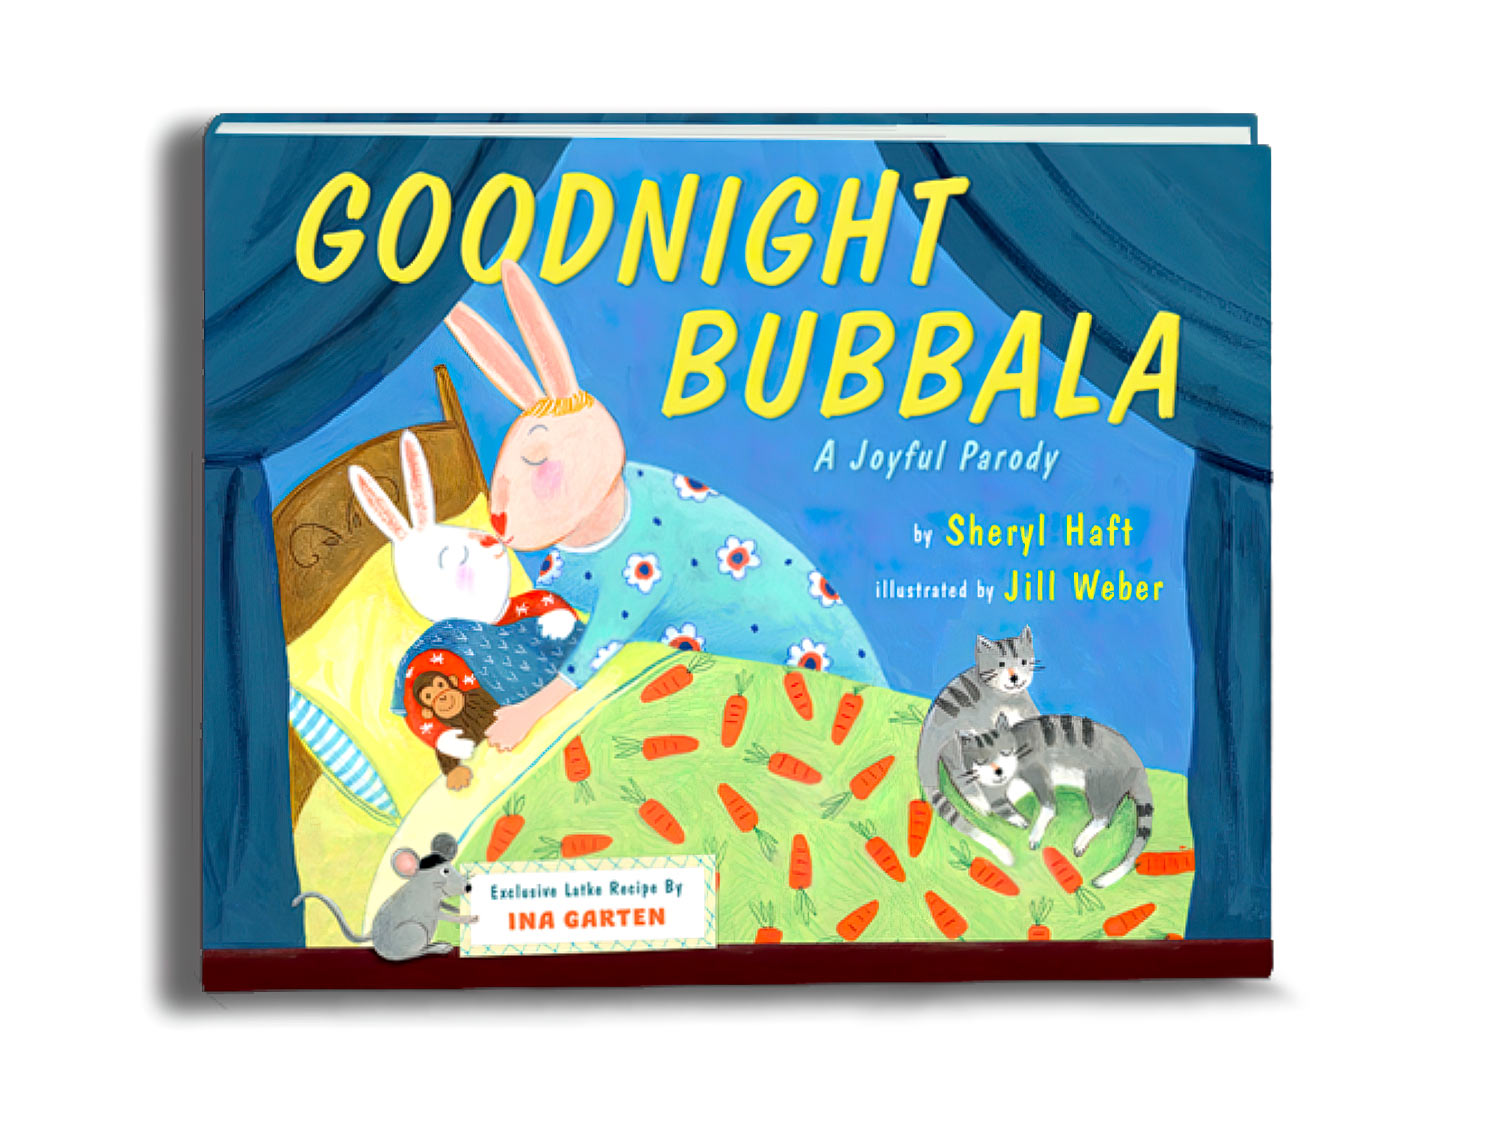 Goodnight-Bubbala_Cover_1500